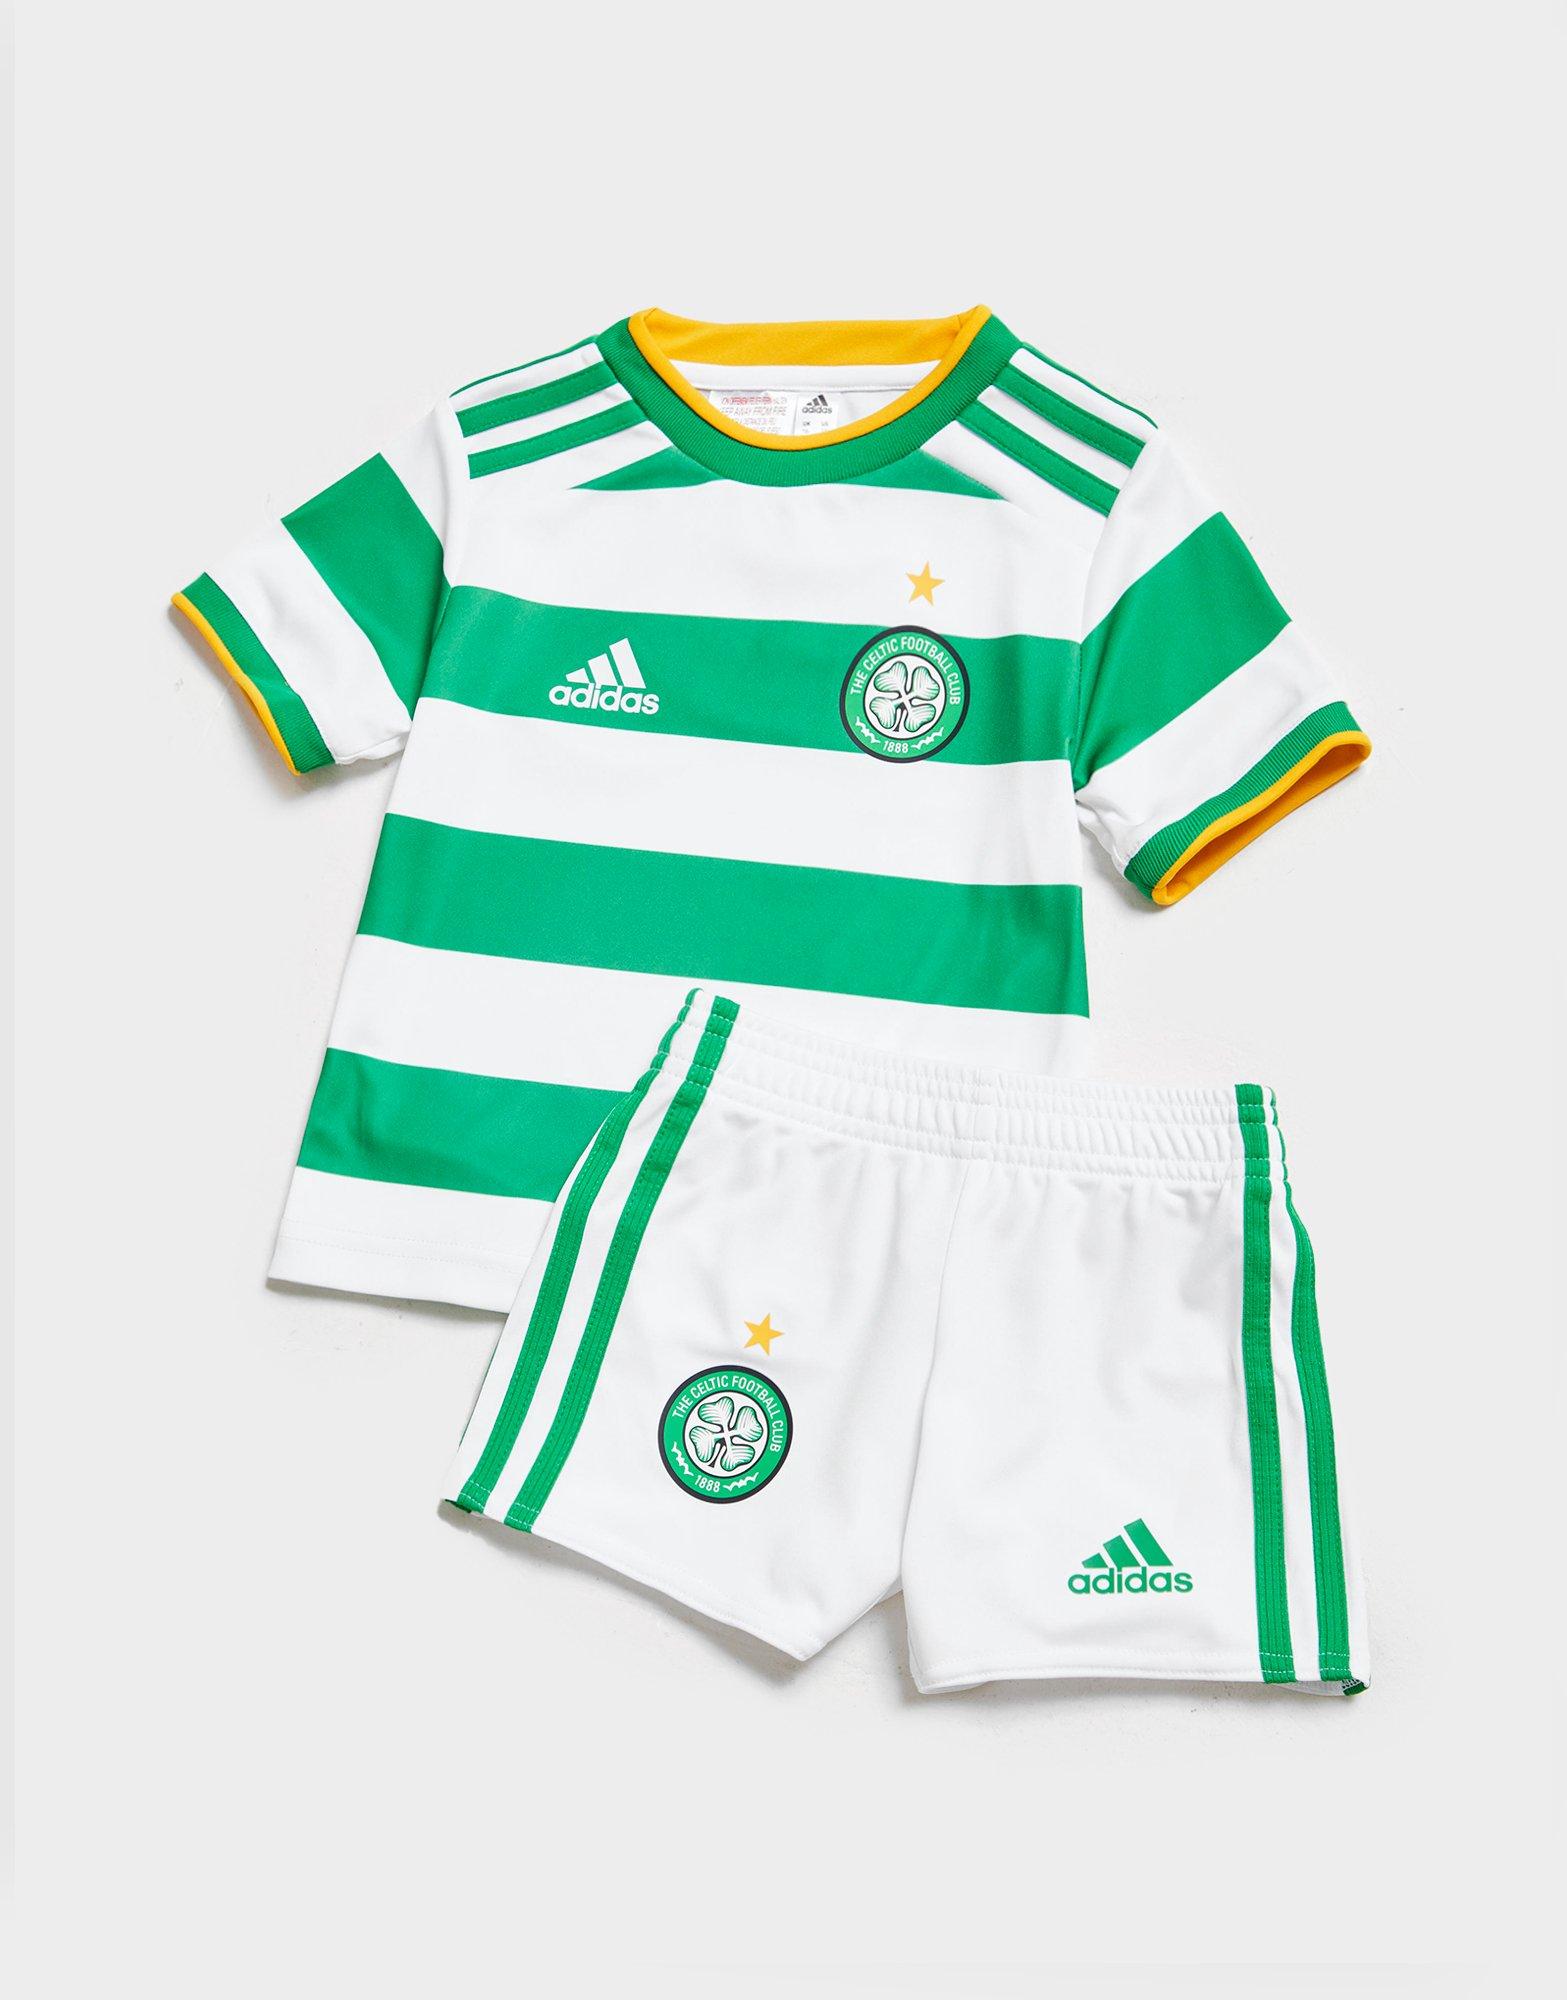 celtic football club jersey